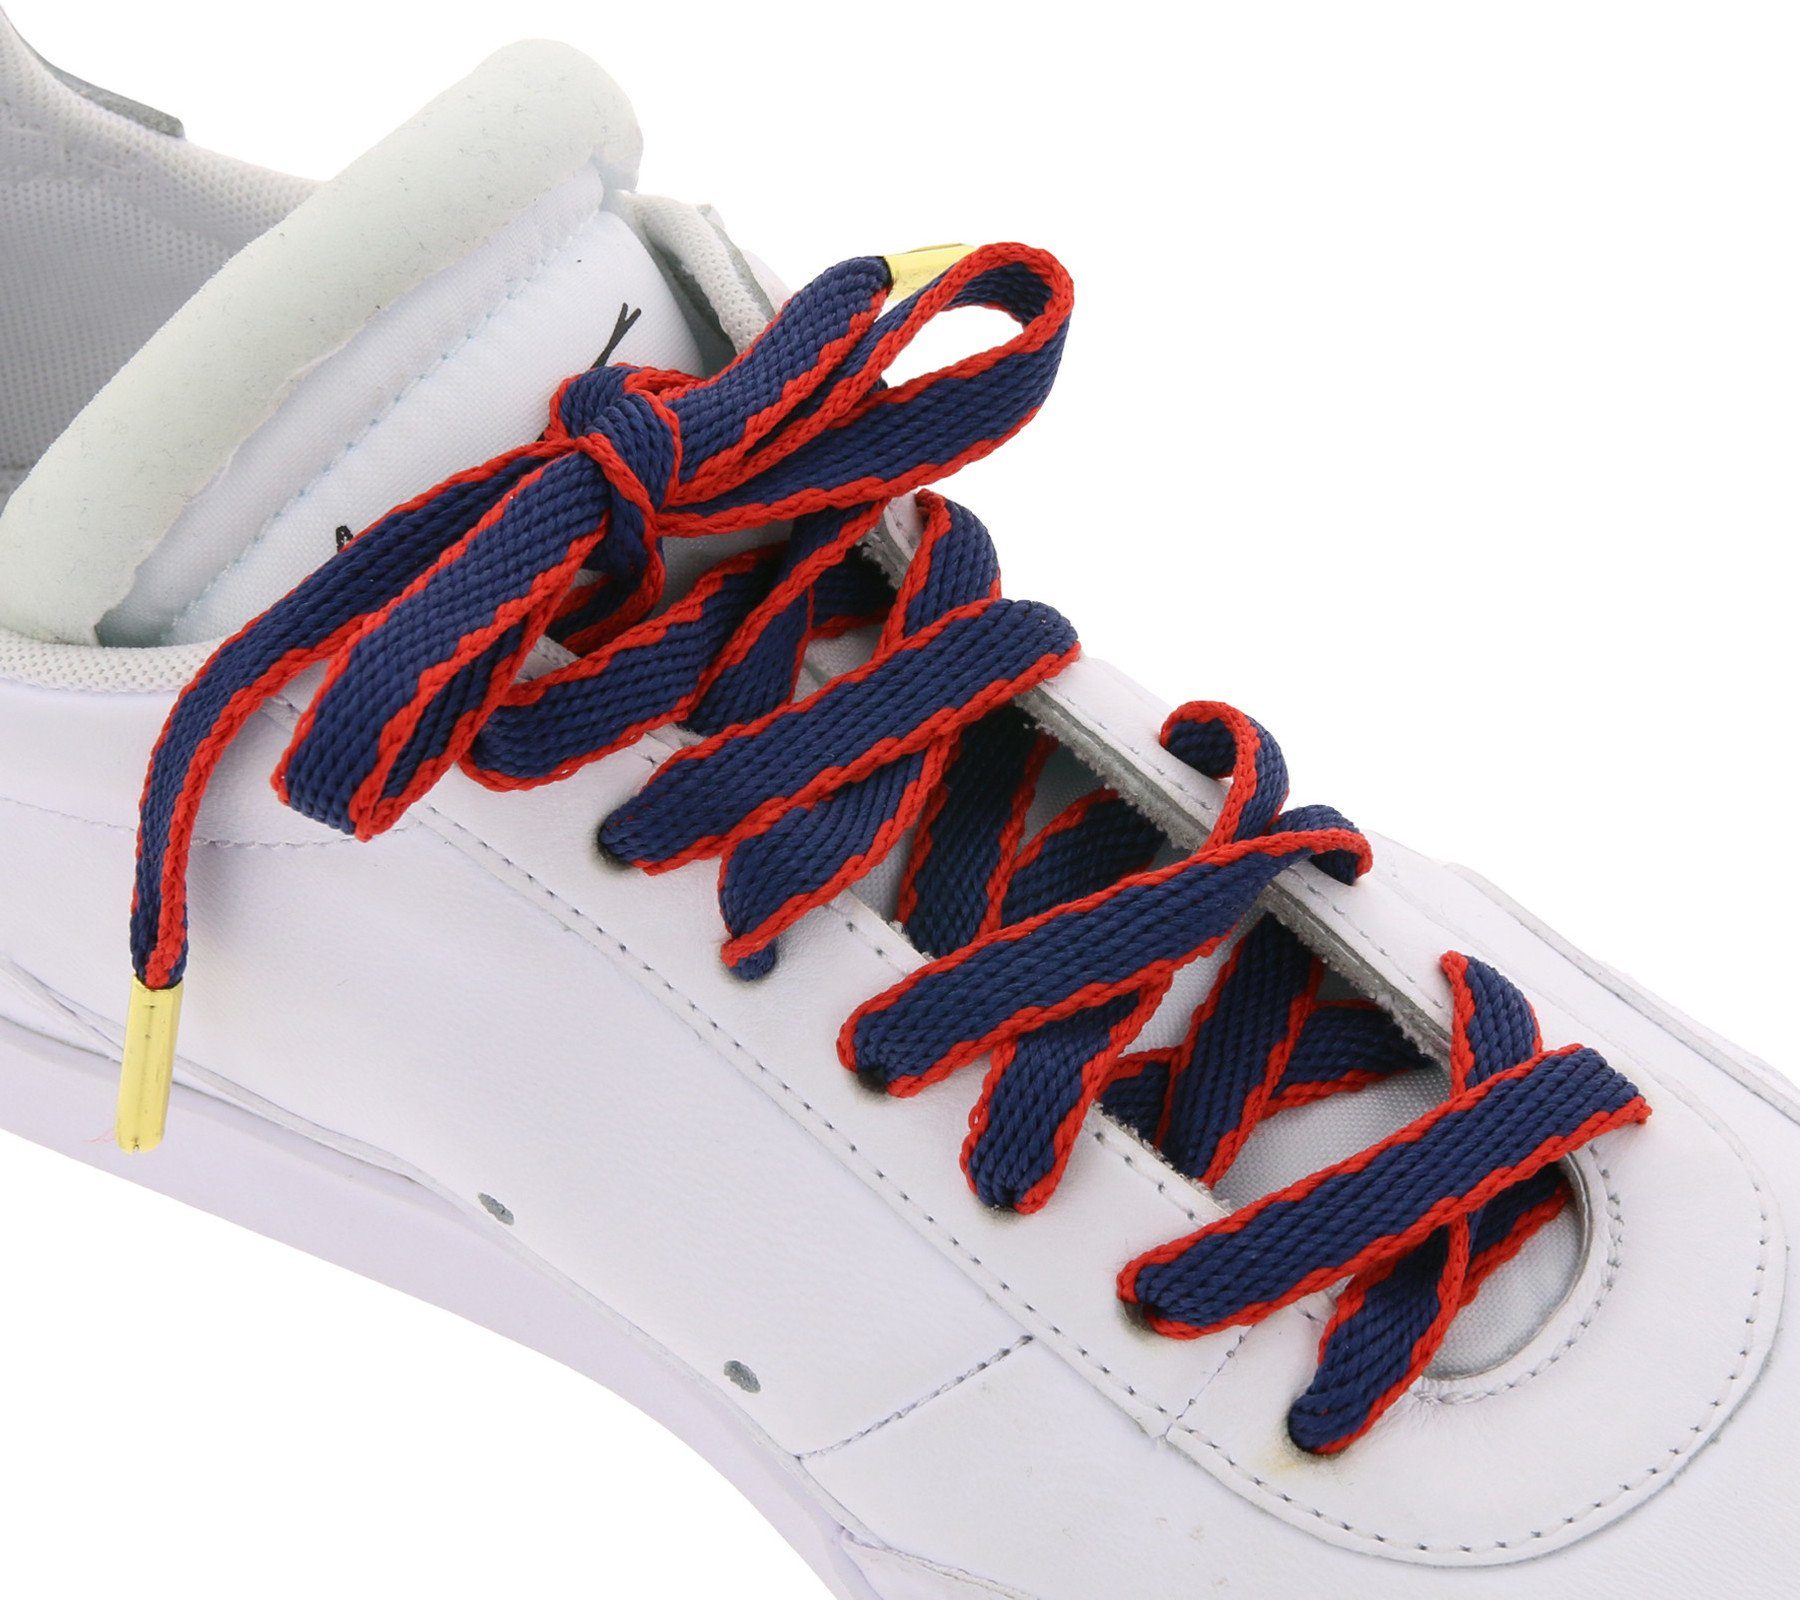 Tubelaces Schnürsenkel TubeLaces Schuhe Schnürsenkel Schnürbänder angesagte Schuhbänder Navy/Rot top